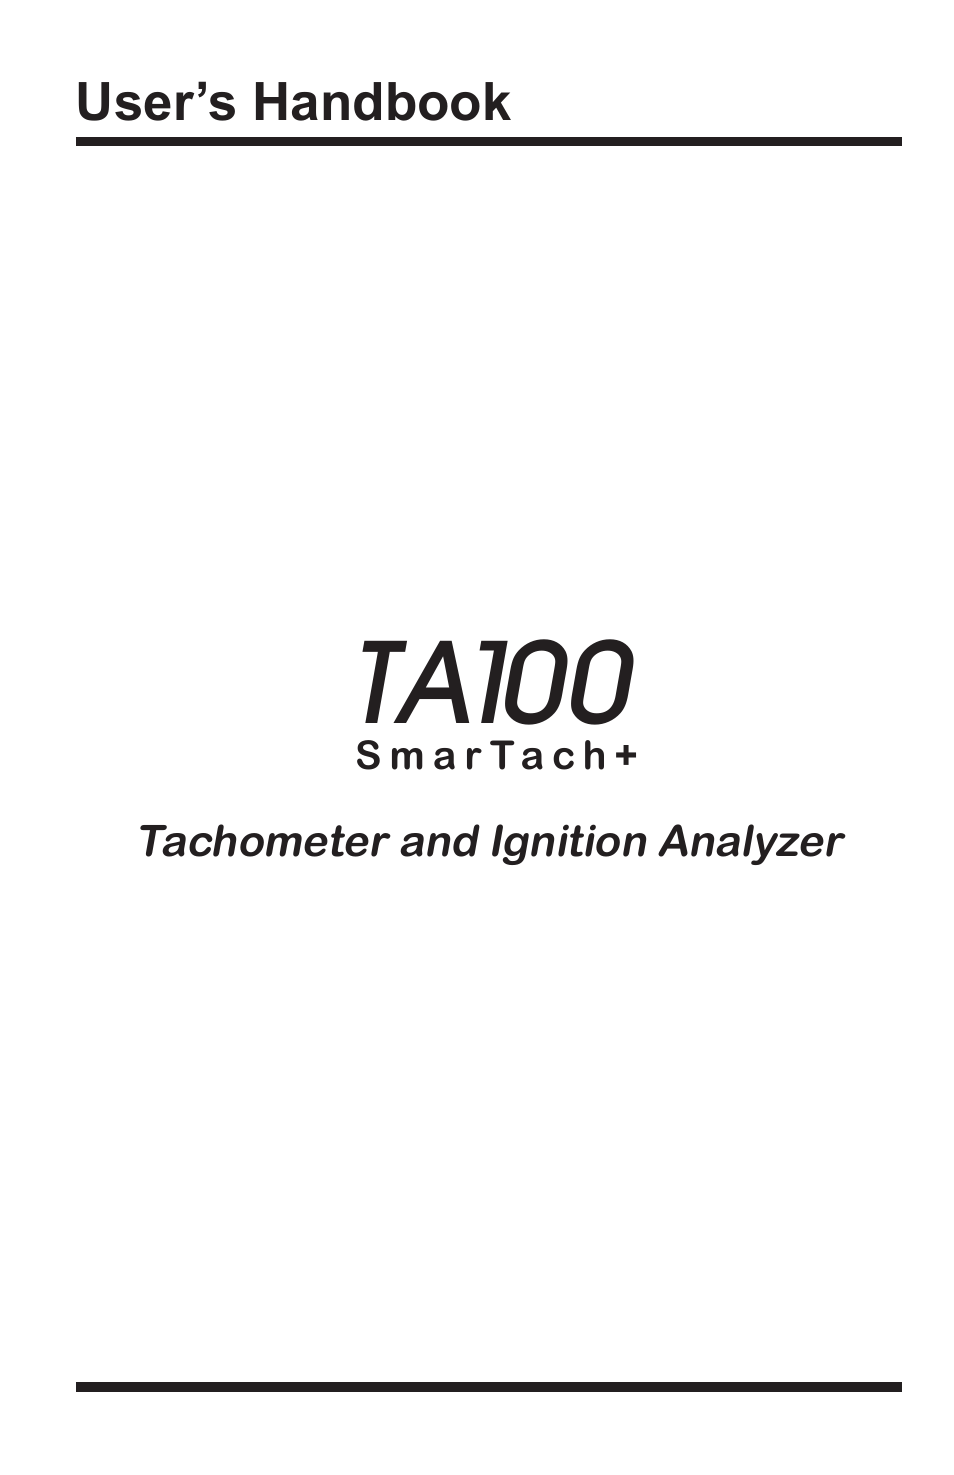 TA100 SmarTach + : Digital Tachometer and Engine Analyzer